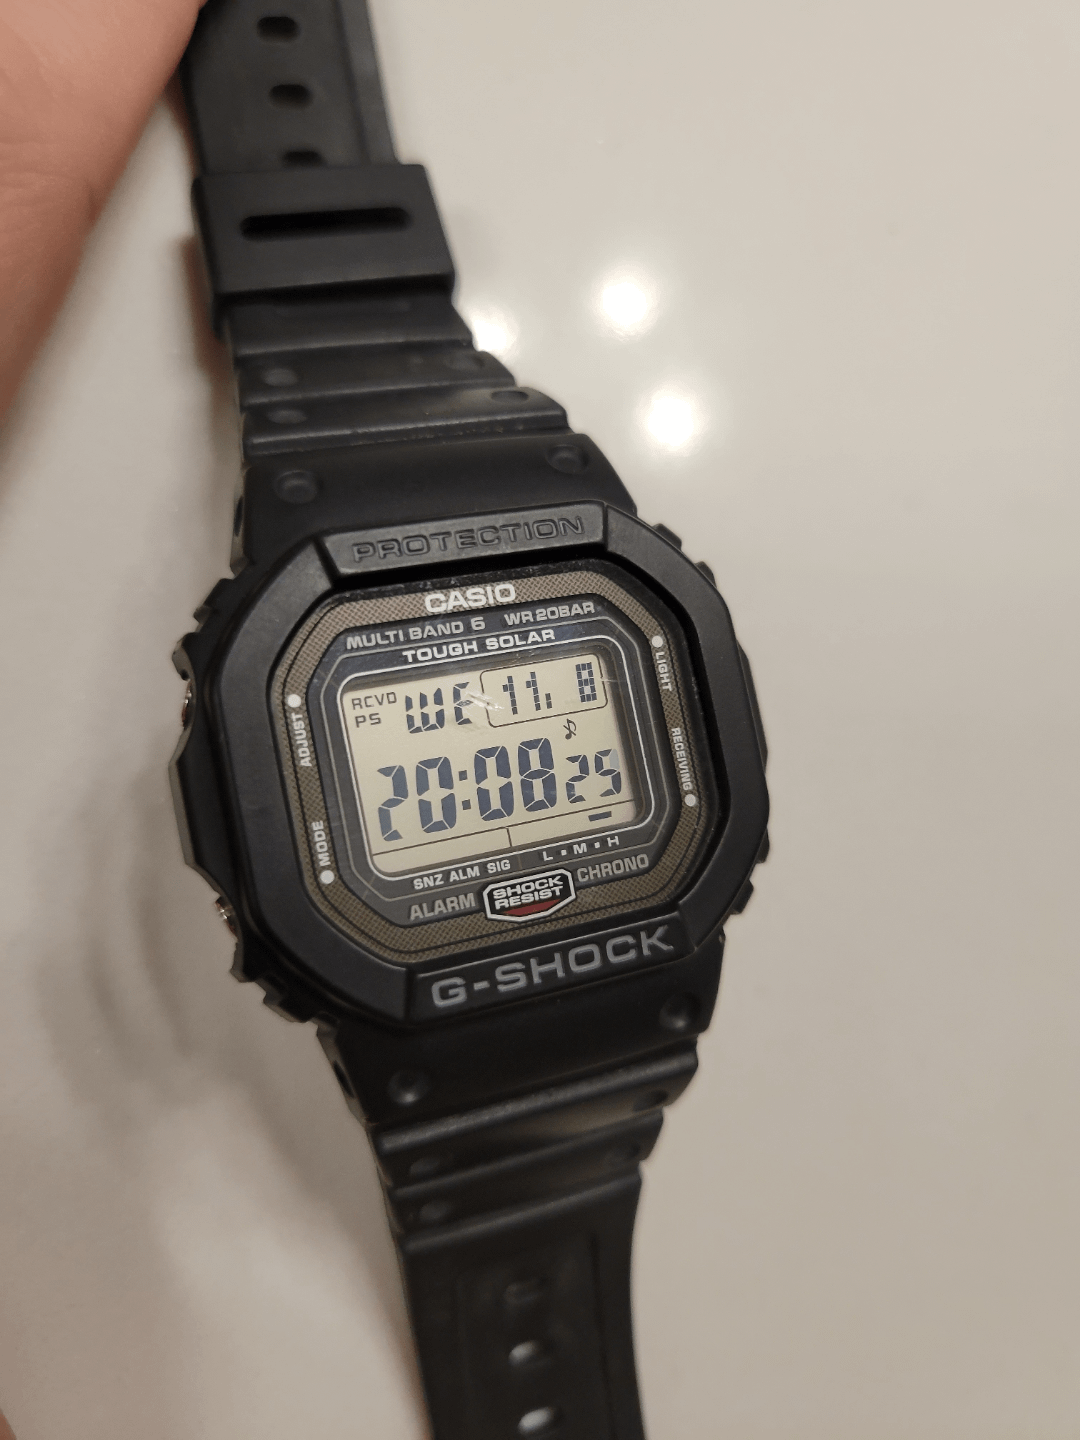 WTS] G-Shock GW-5000U-1jf | WatchCharts